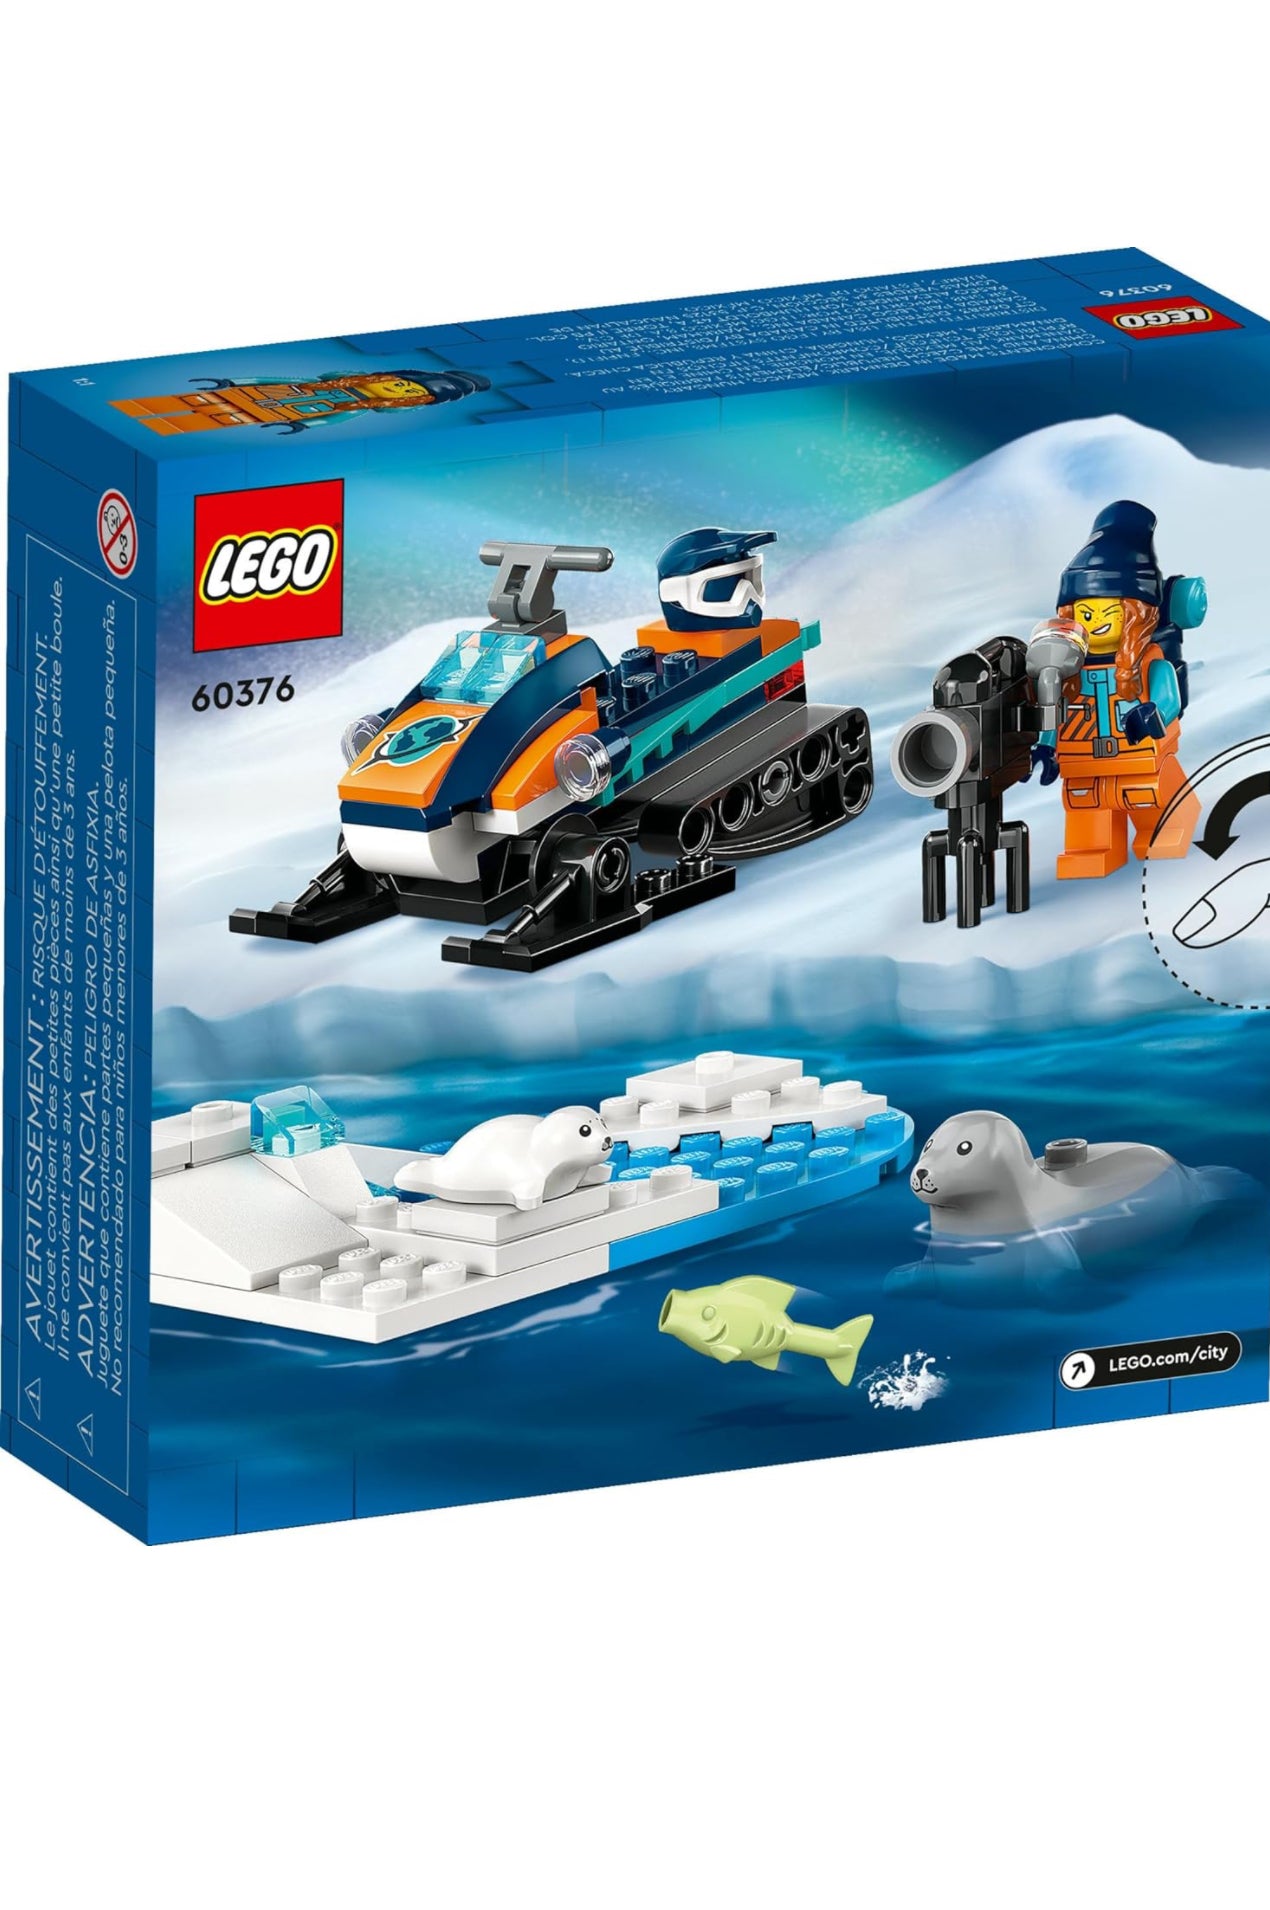 Lego Arctic Explorer Snowmobile #60376